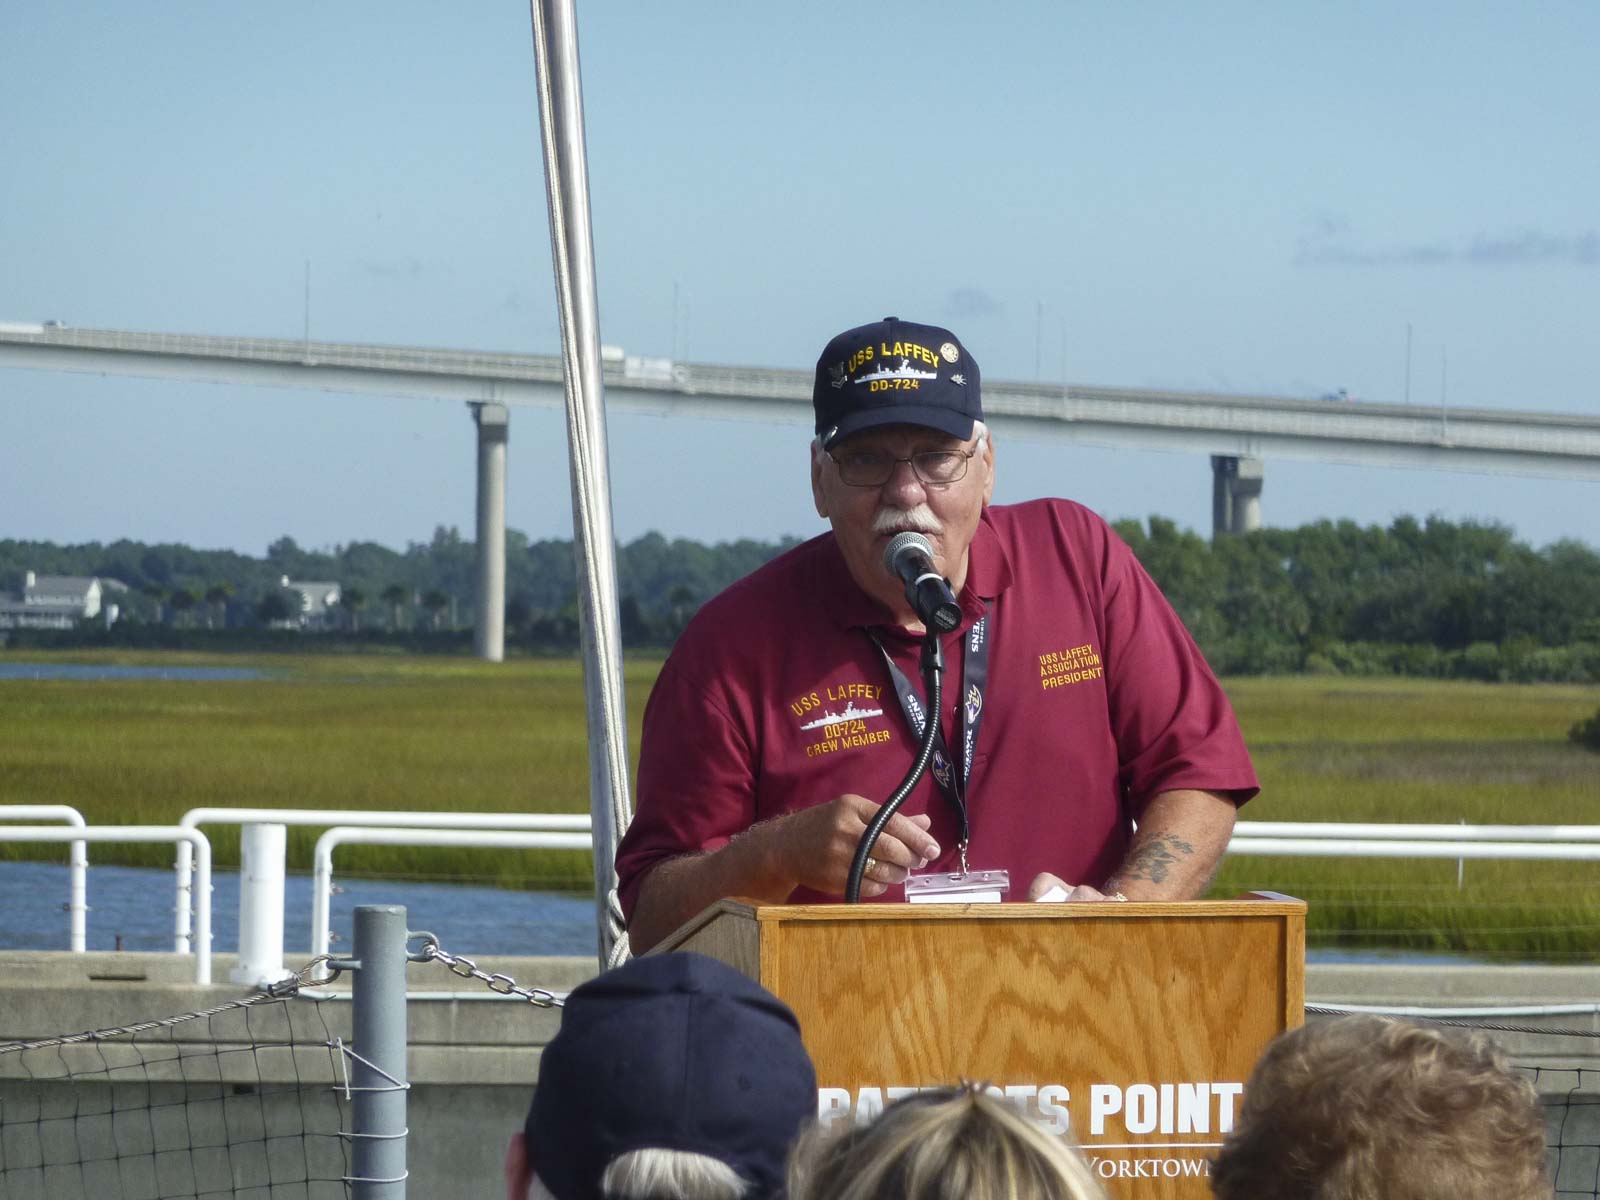 USS Laffey Worker Giving Speech - Patriots Point Foundation